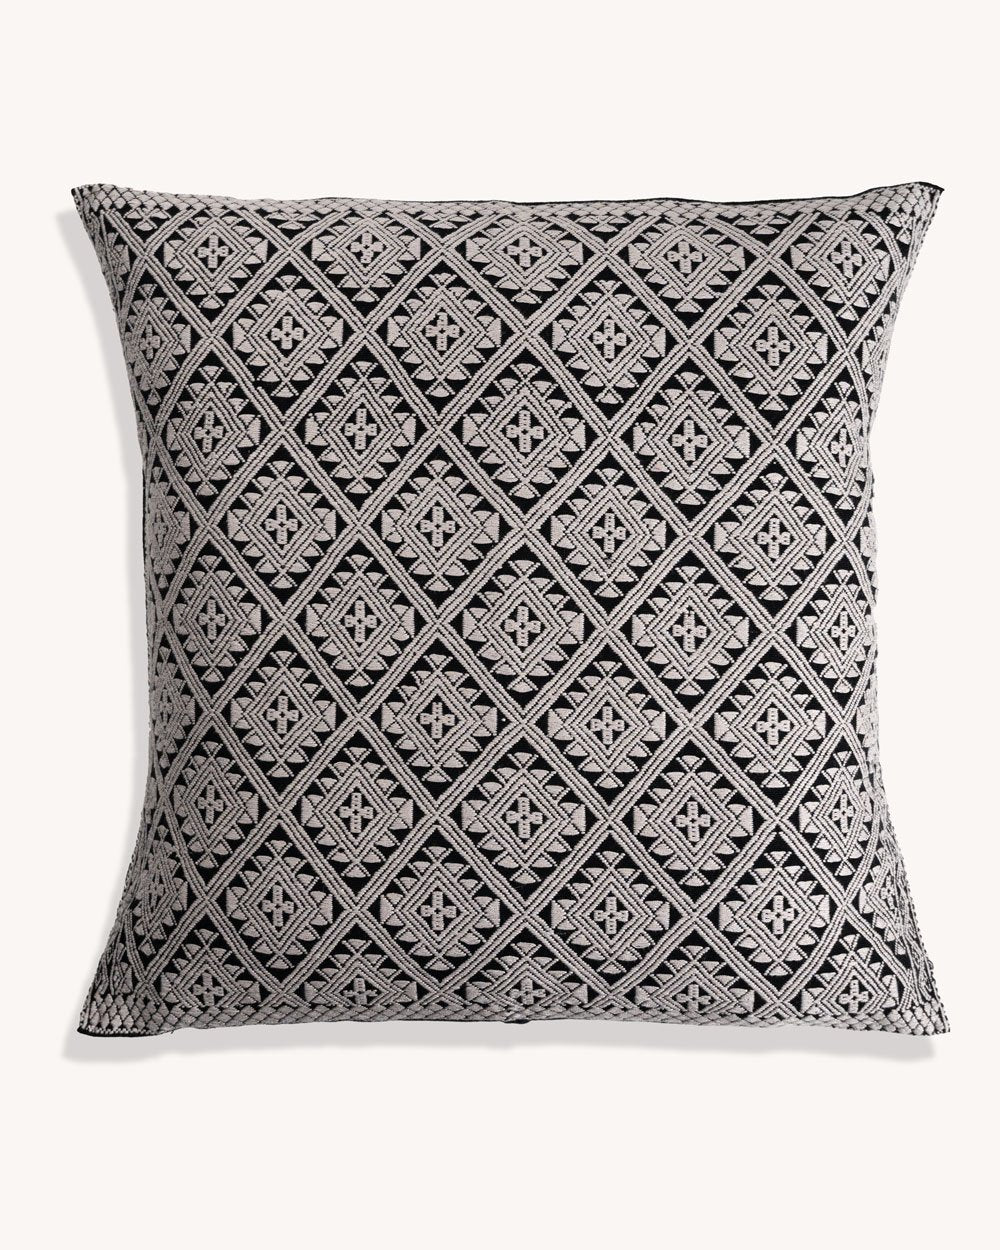 Zuma Handwoven Brocade Cushion Cover